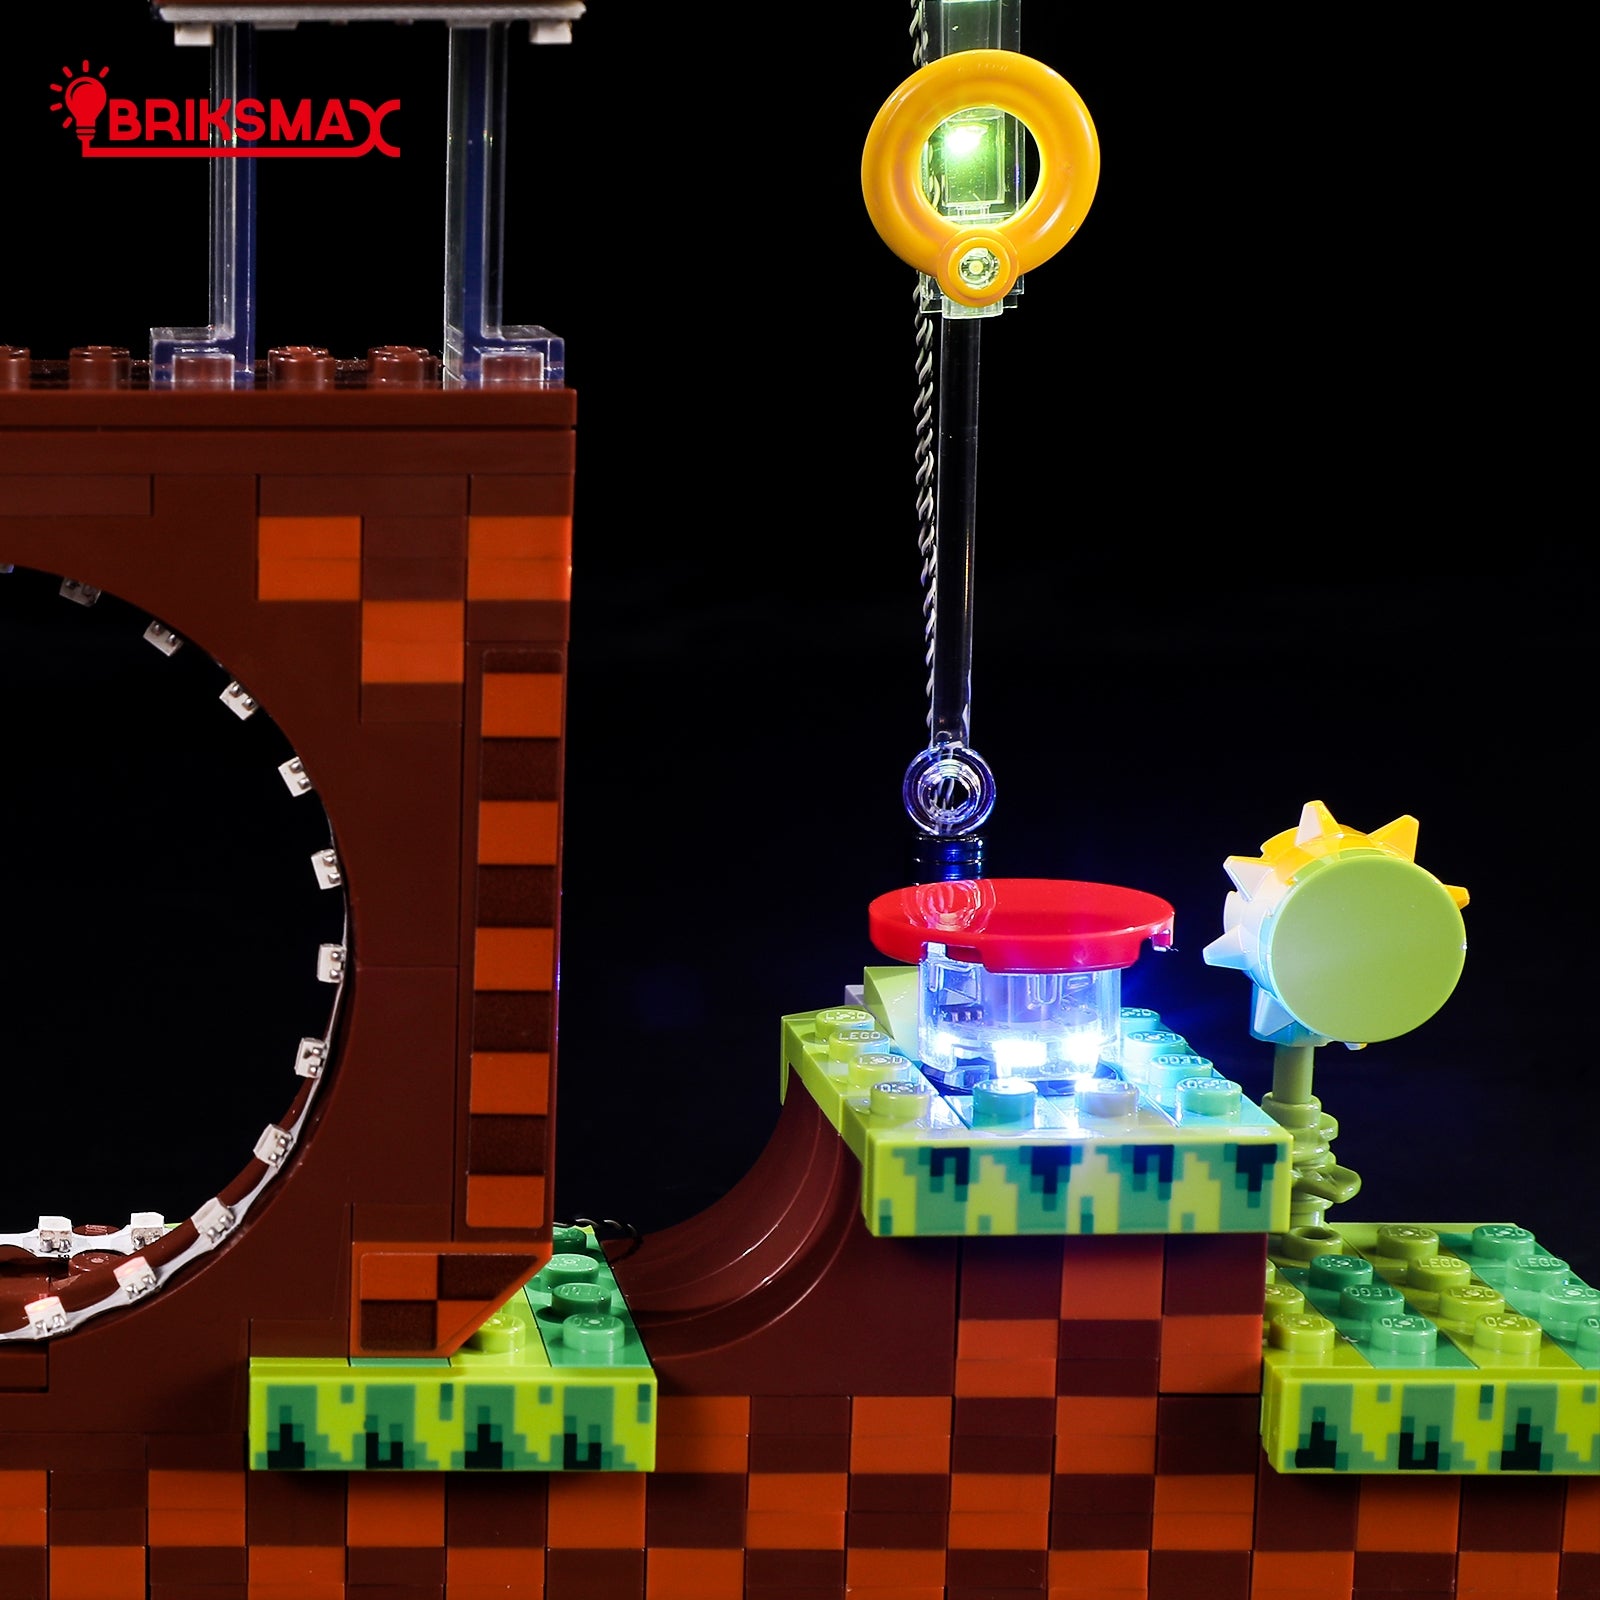 LEGO - Sonic - The Hedgehog - Green Hill Zone - 21331